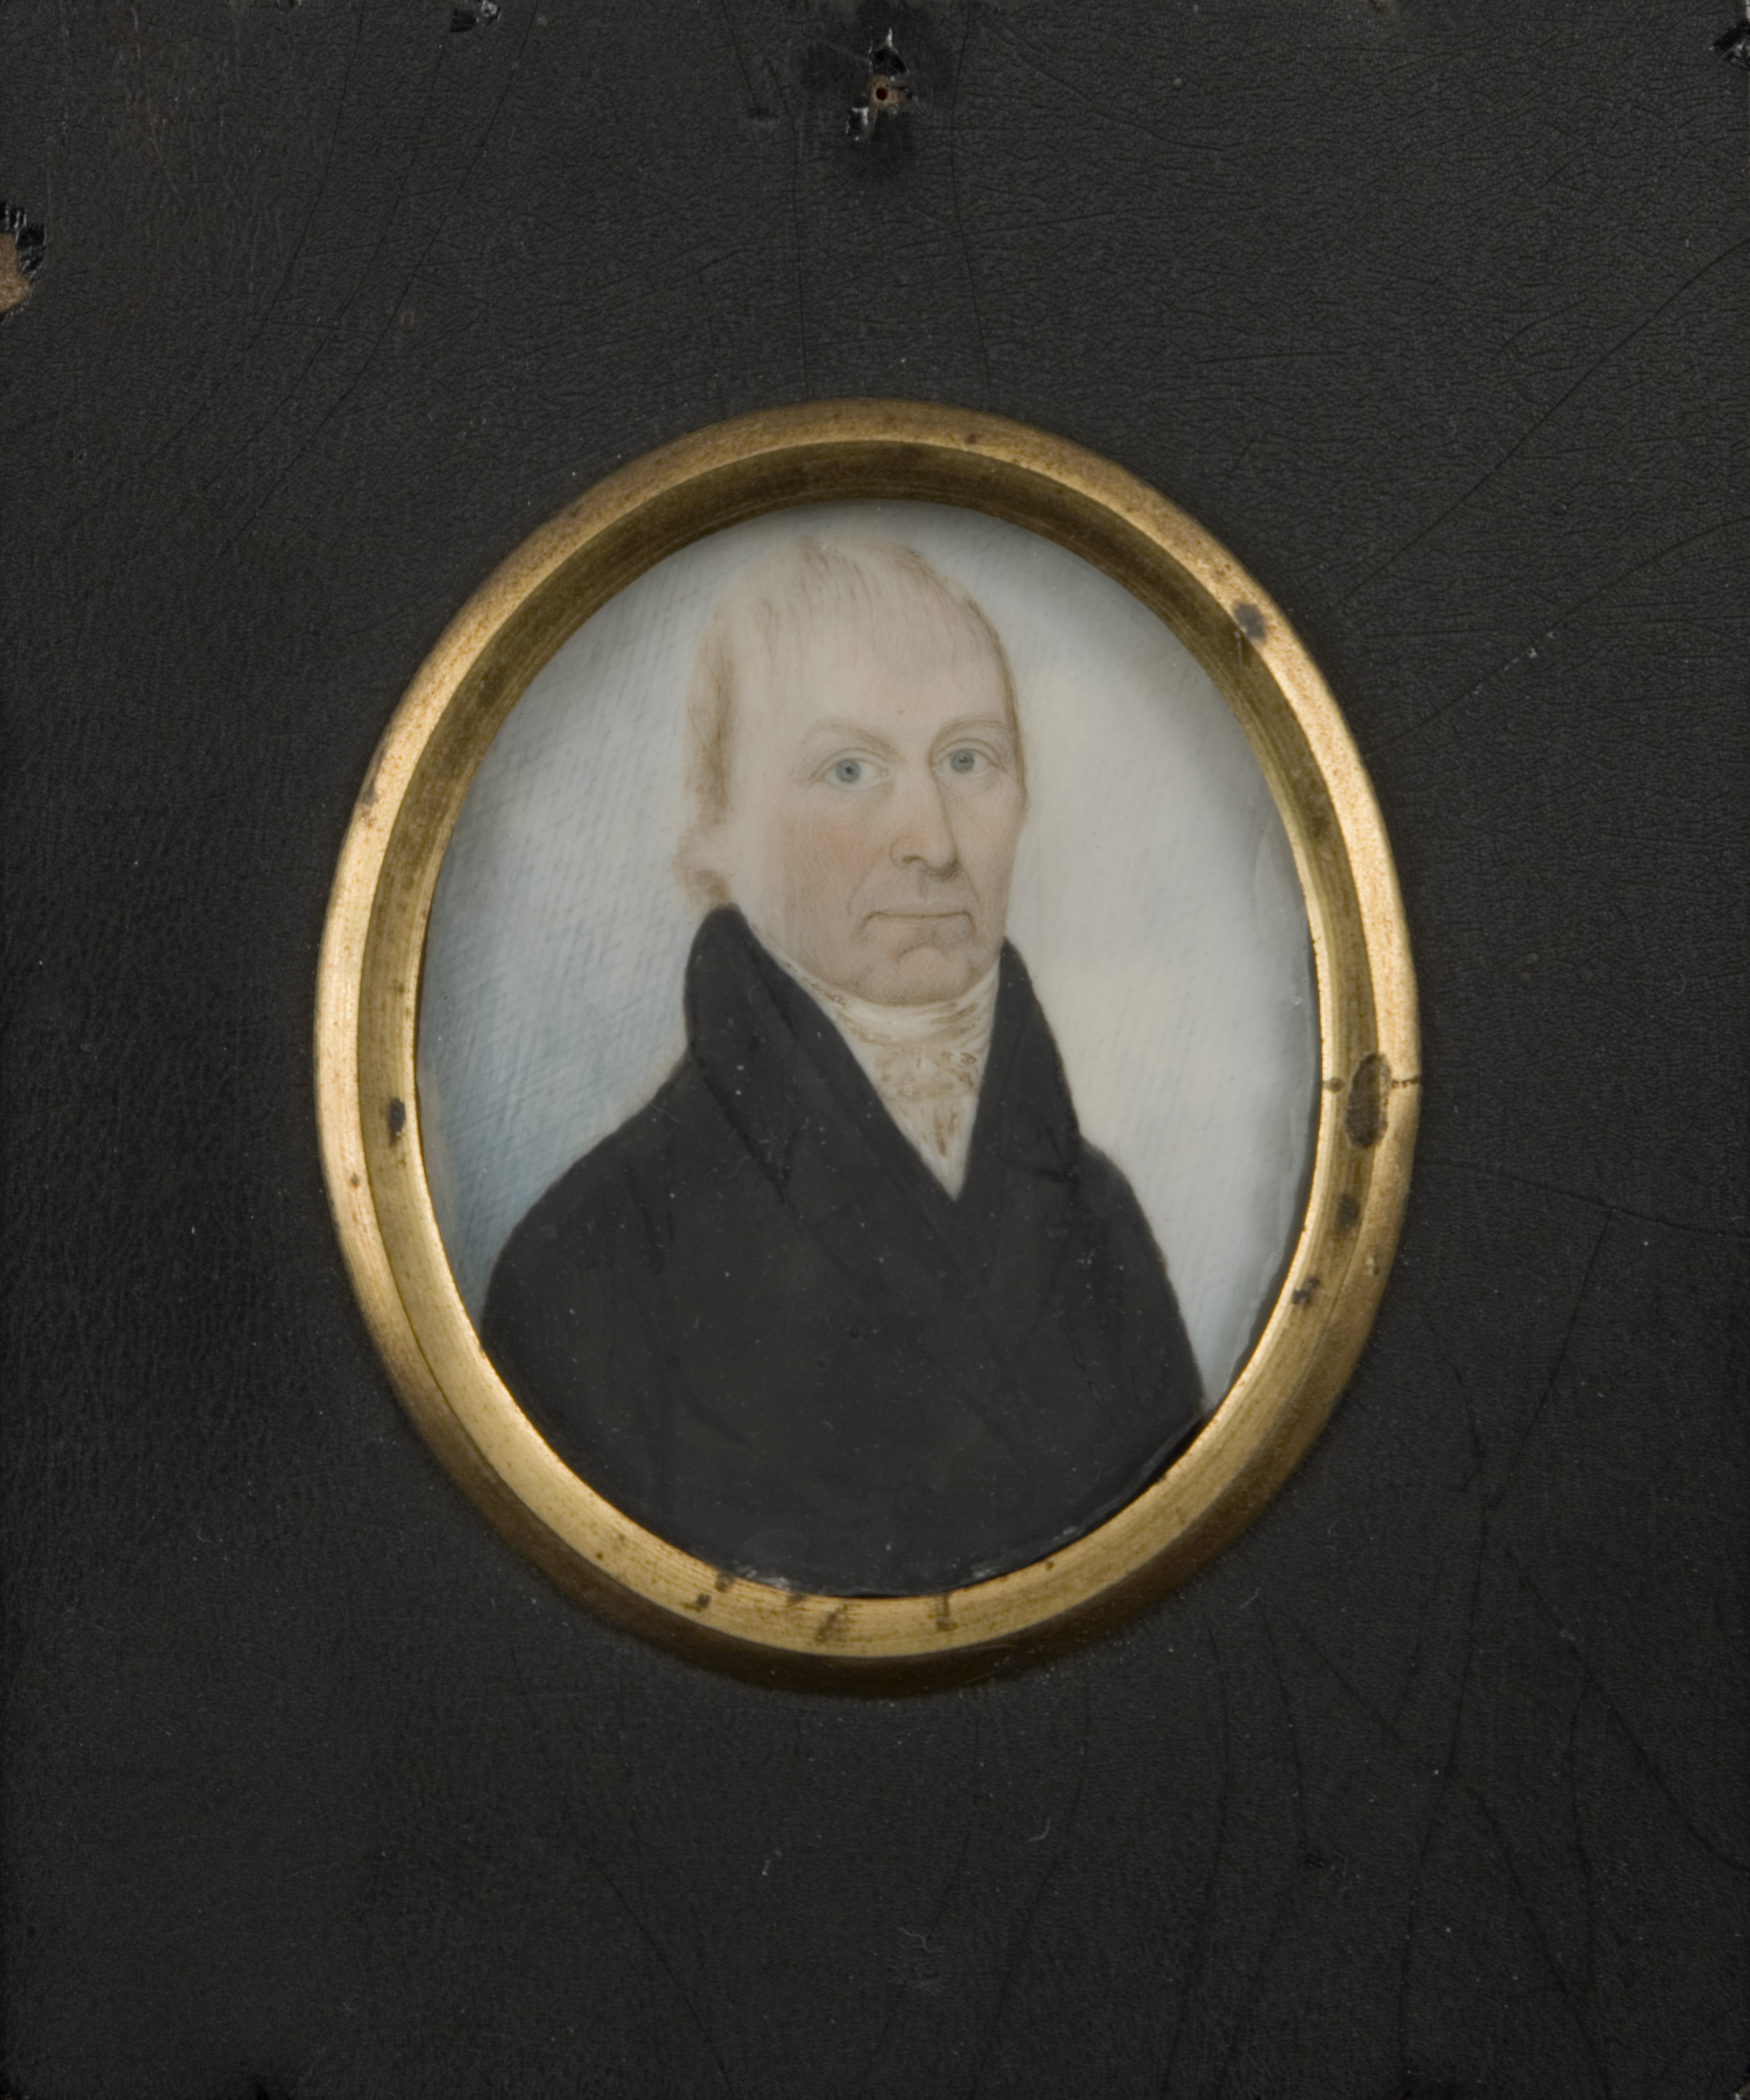 Nathaniel Coit Allen portrait miniature attributed to John Brewster, Jr., ca. 1810